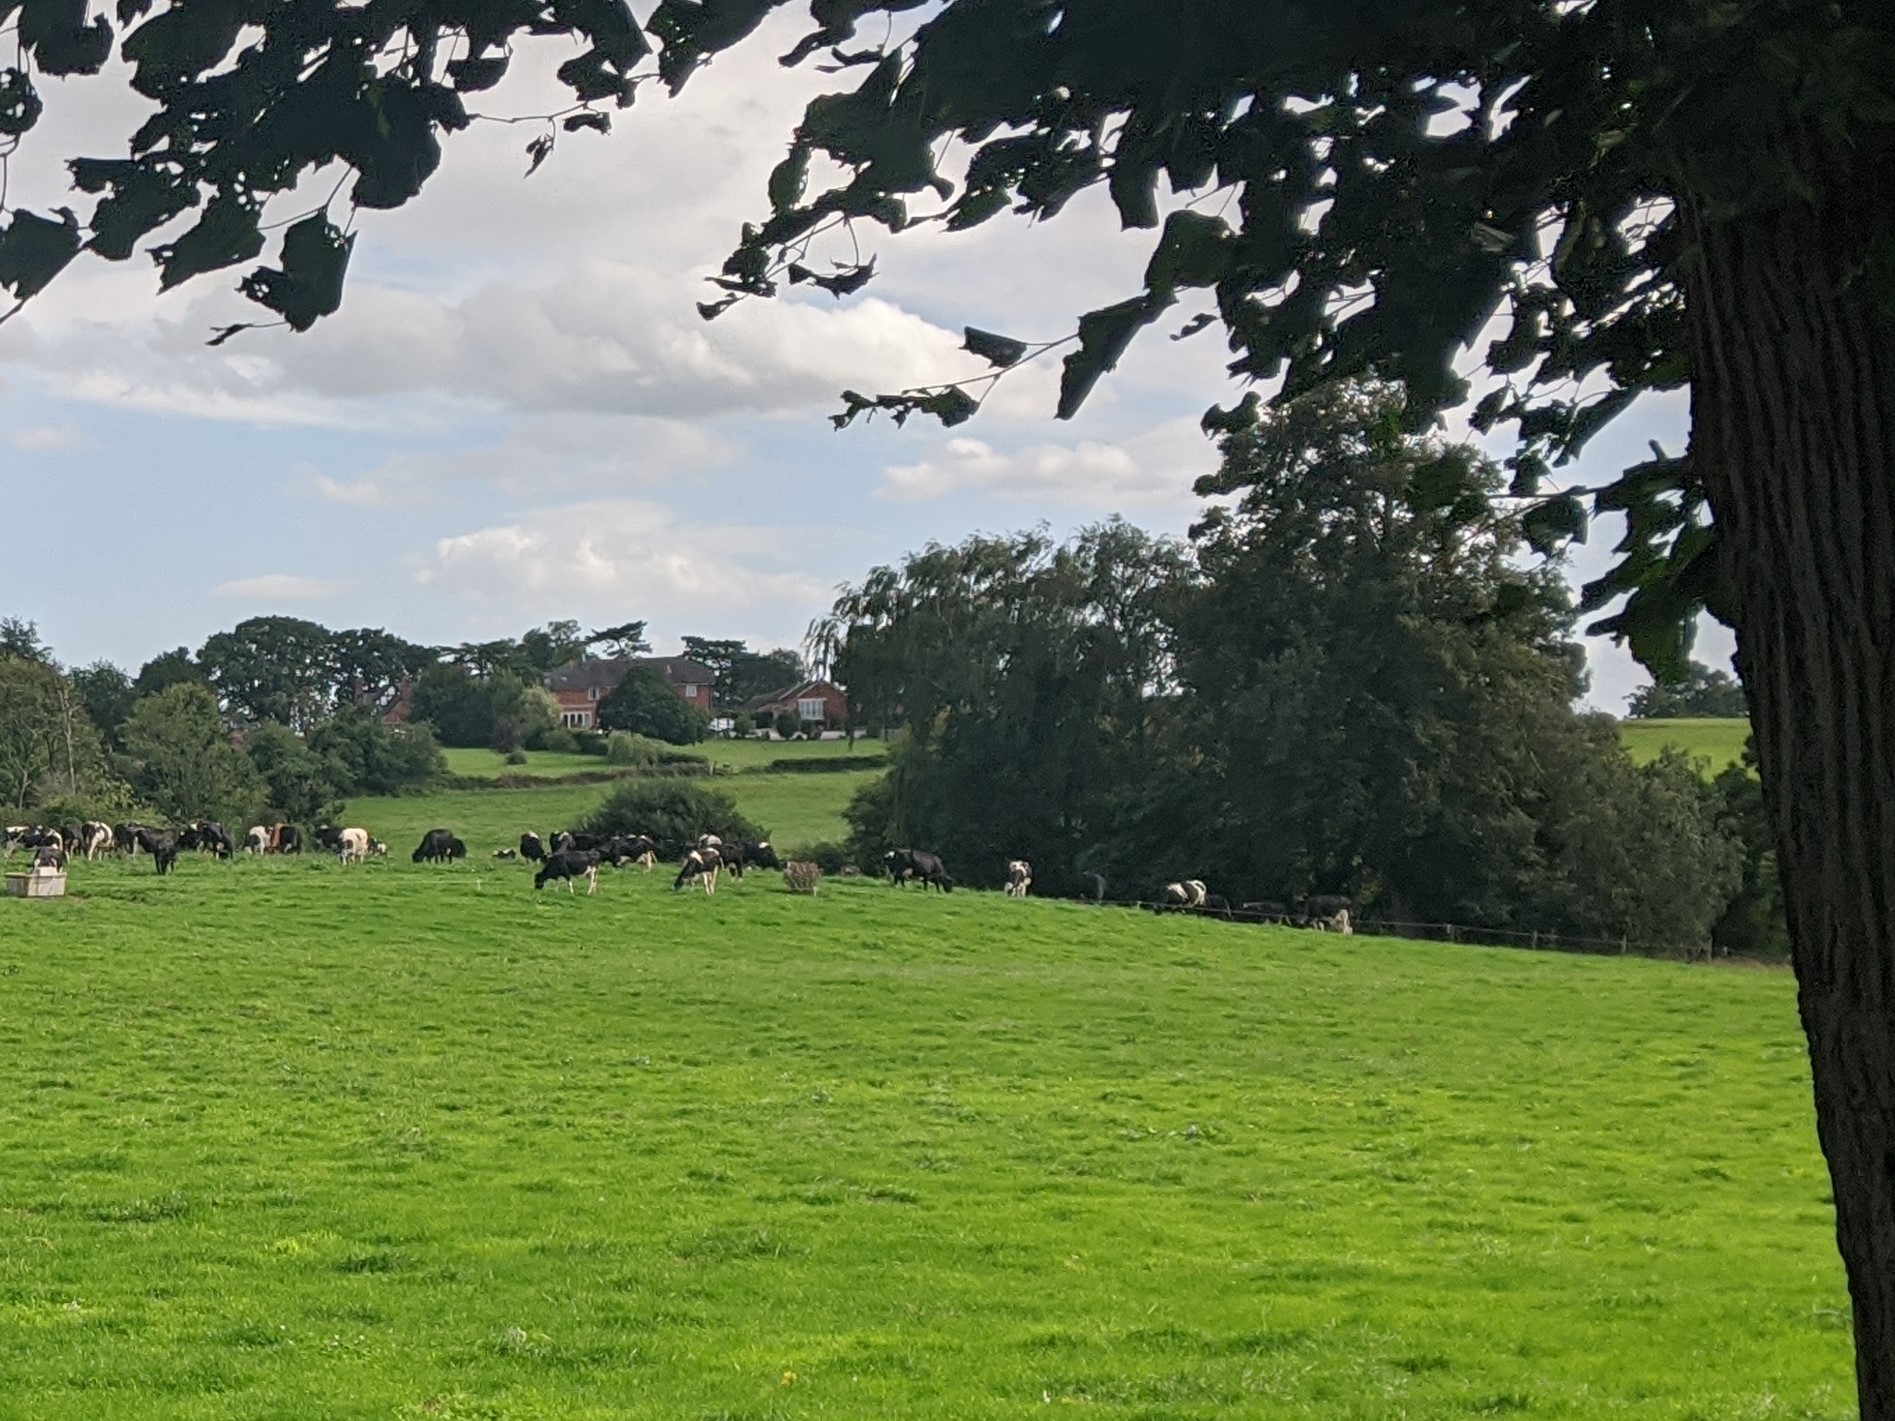 Cattle grazing behind Hankelow court, 20th August